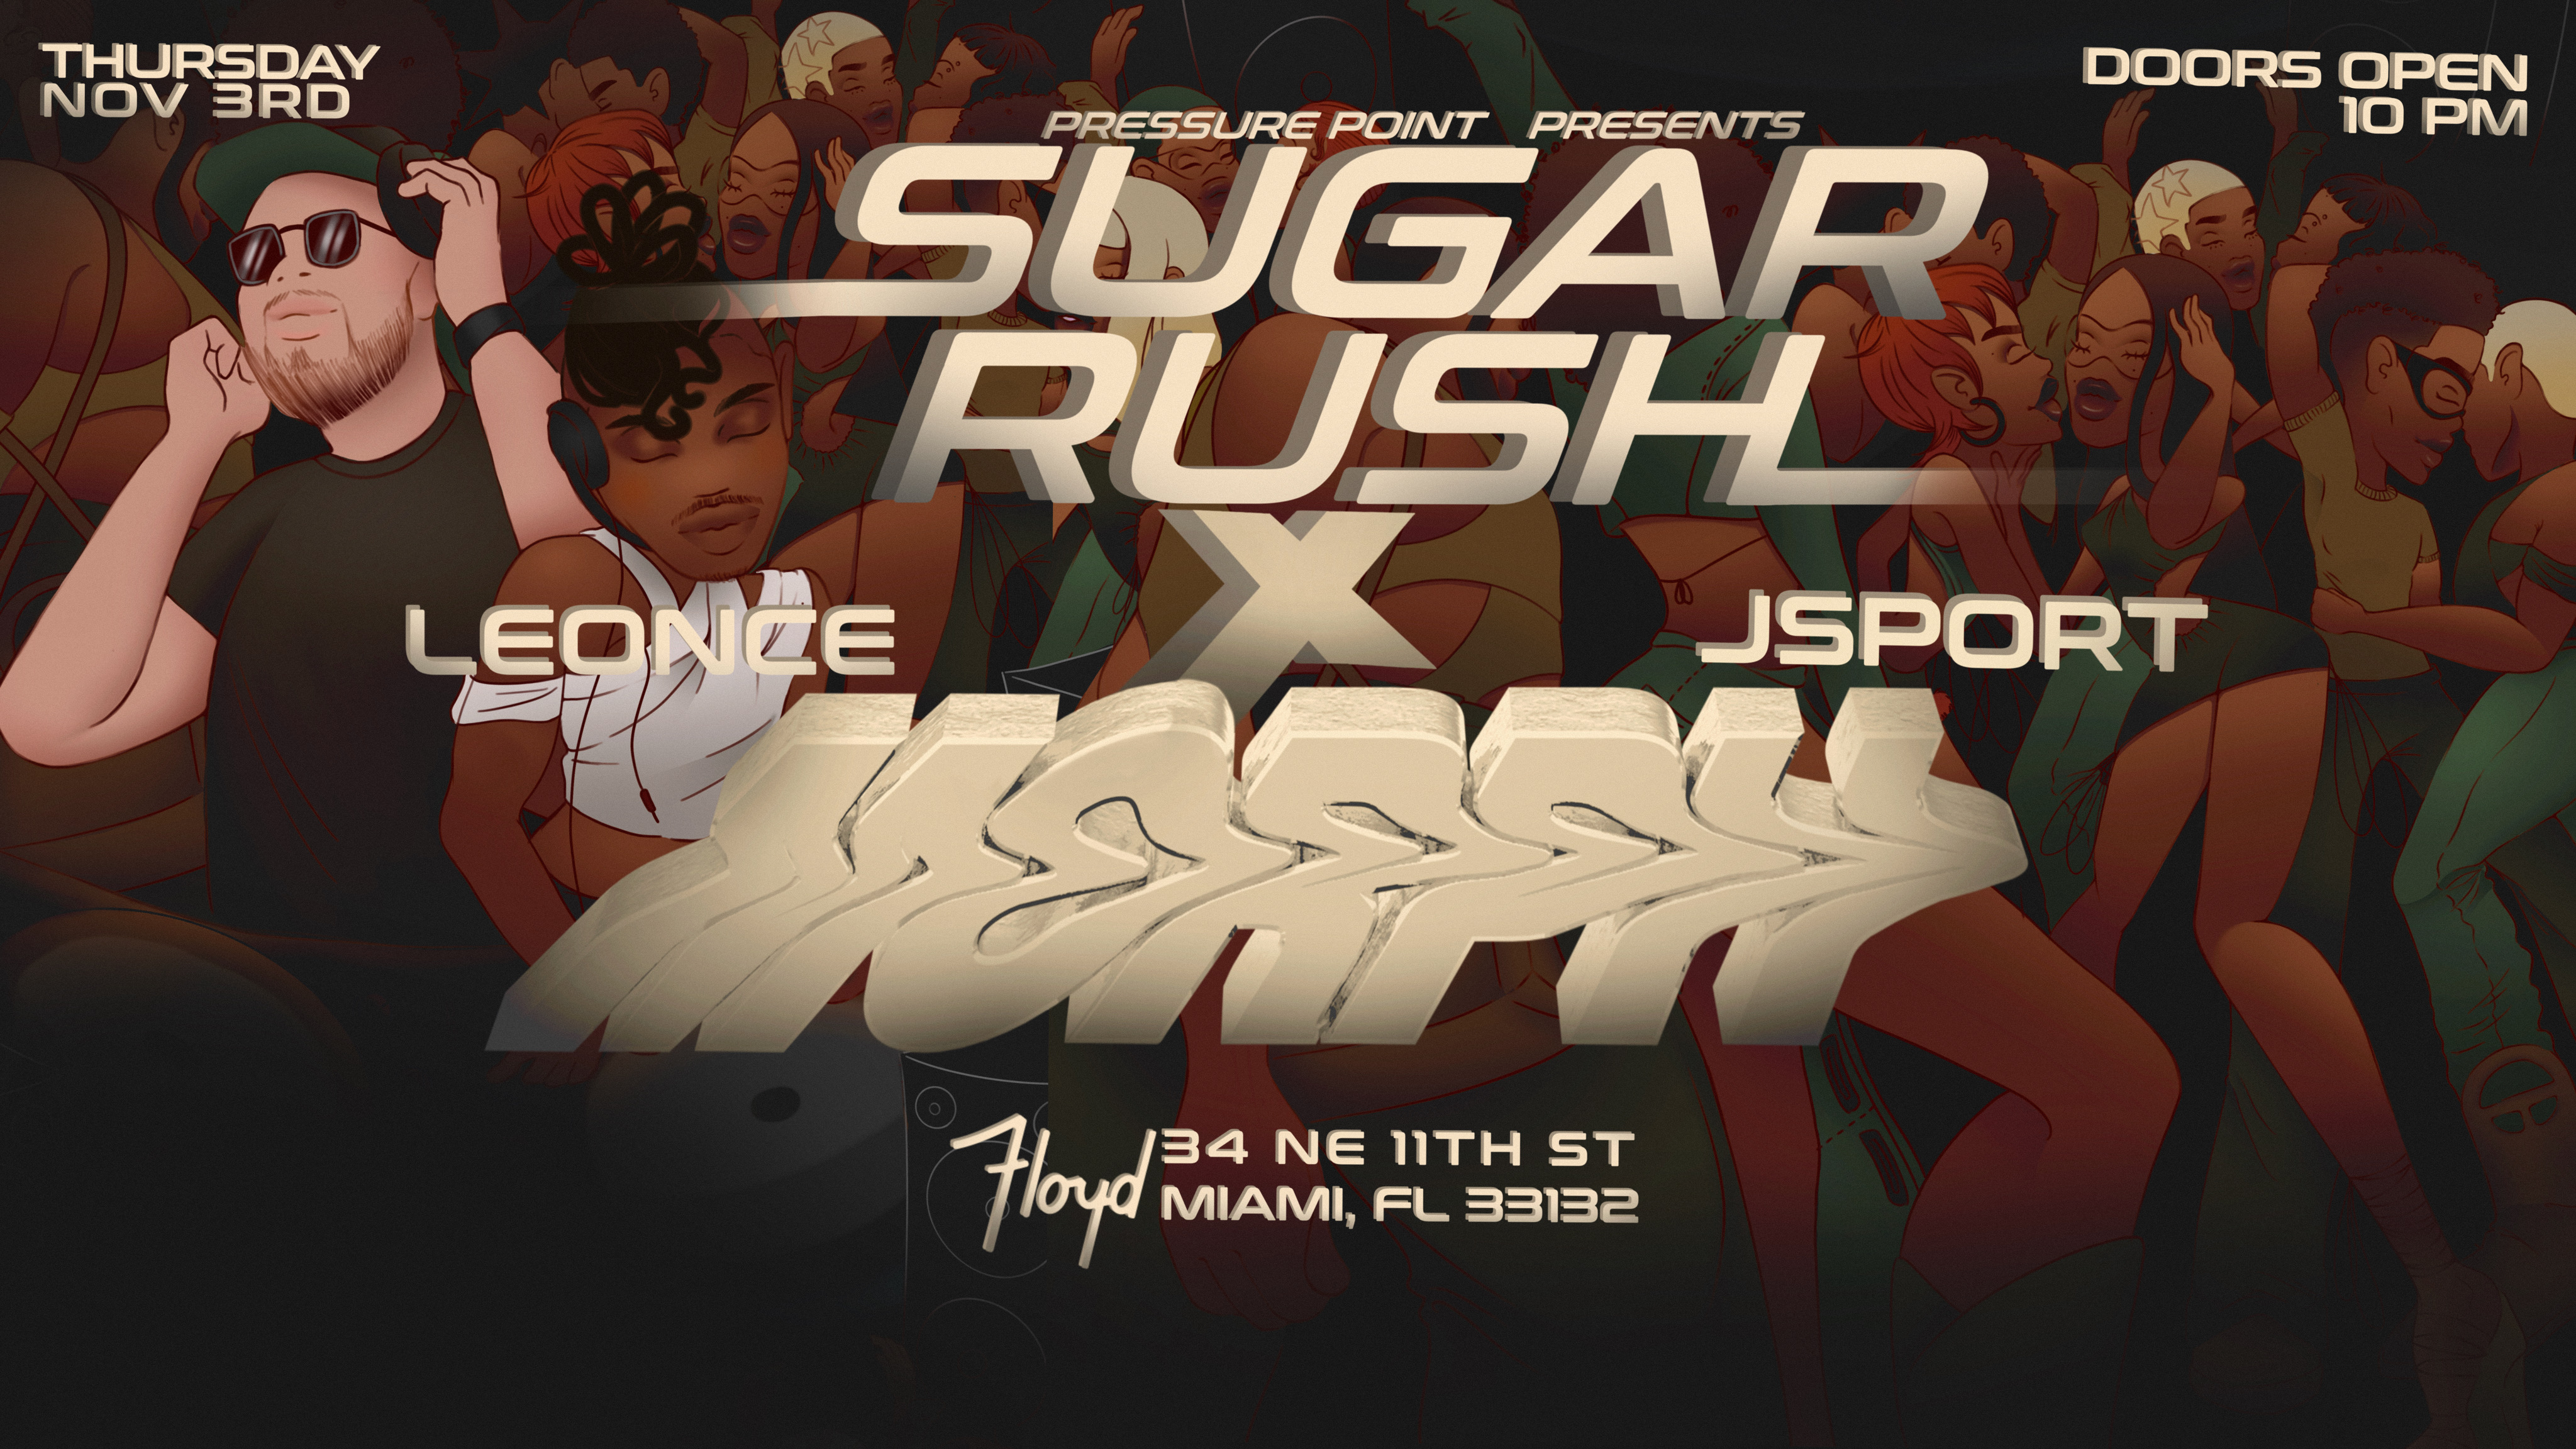 Sugar Rush x Morph: Leonce & JSPORT at Floyd, Miami